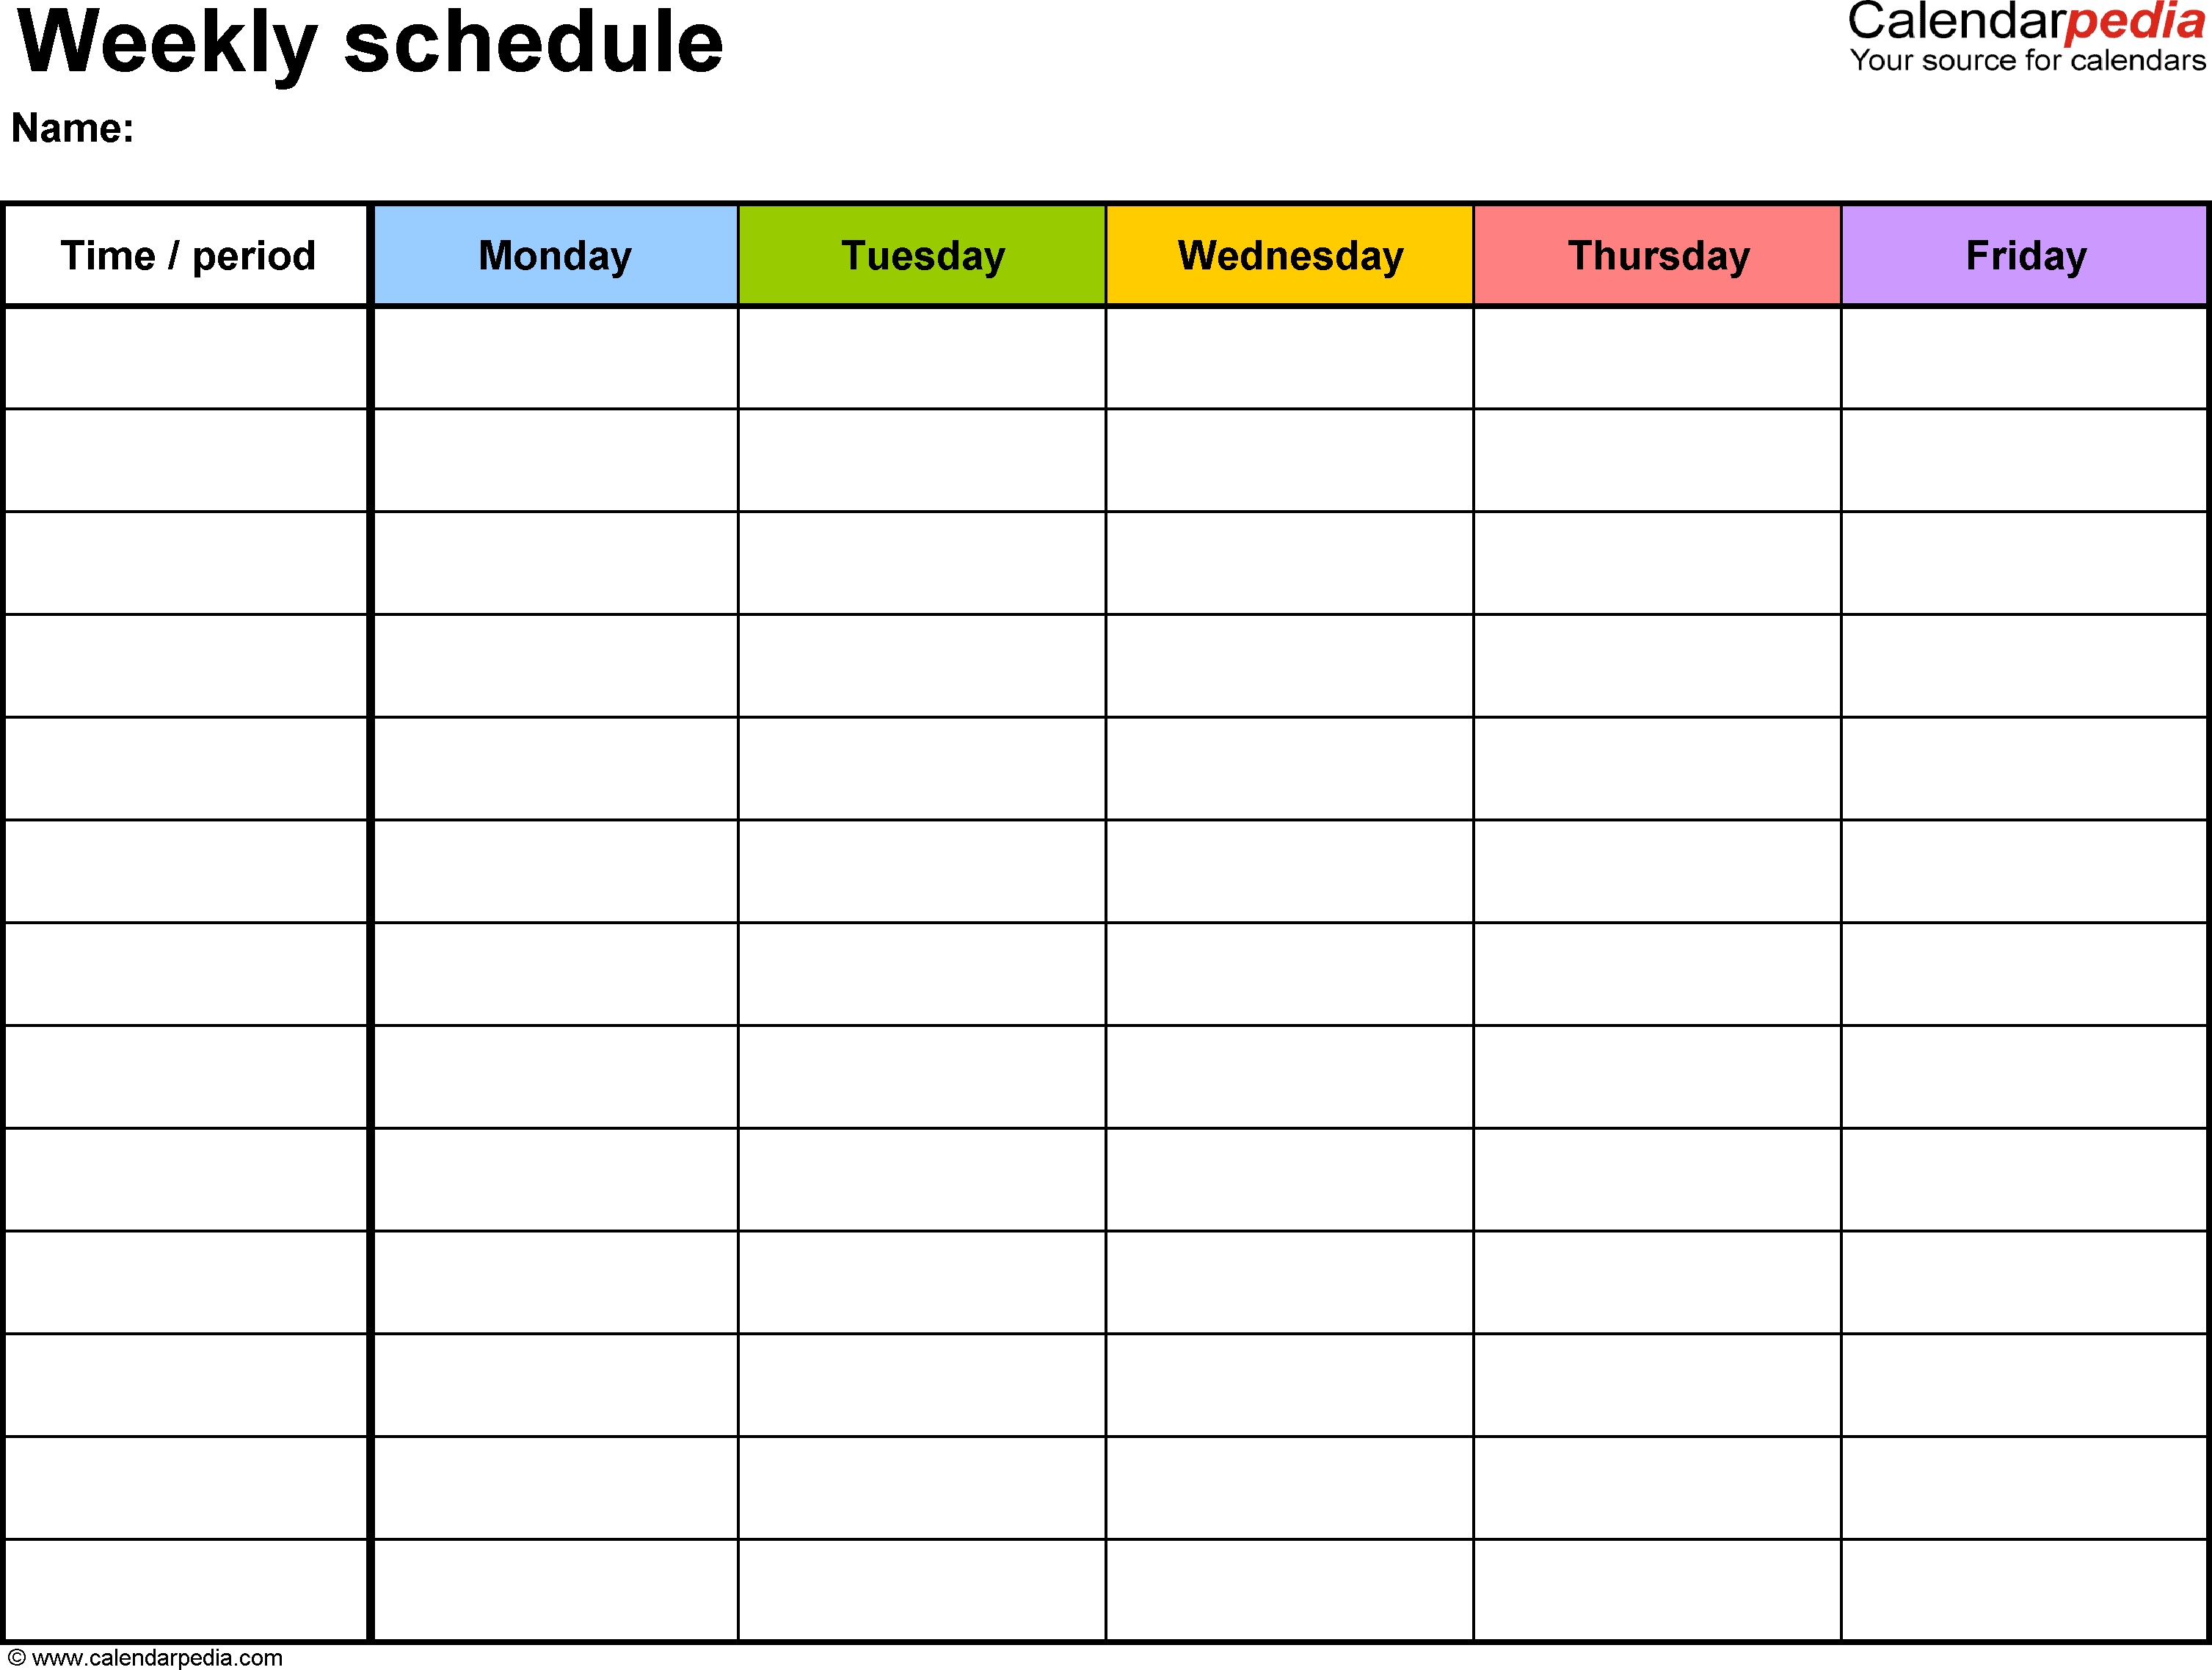 Weekly Schedule Template For Word Version 1: Landscape, 1 Calendar Week Template Excel